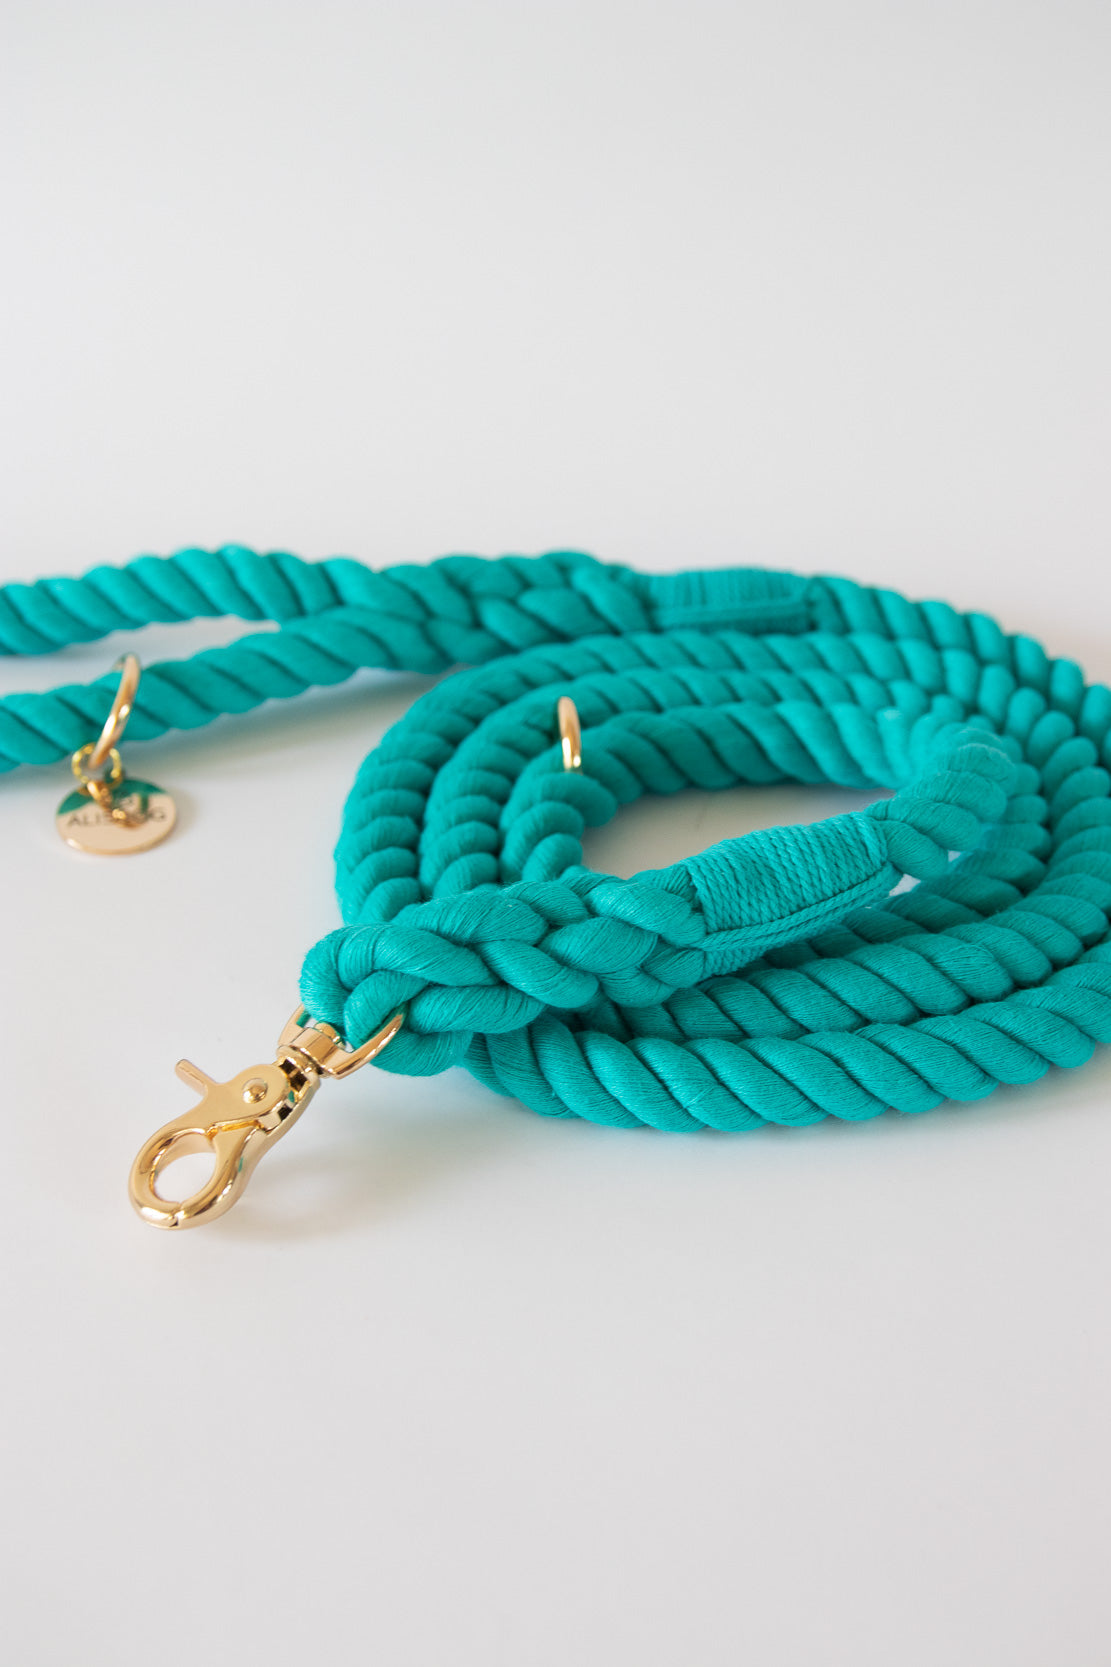 Blue Rope leash 180 cm long